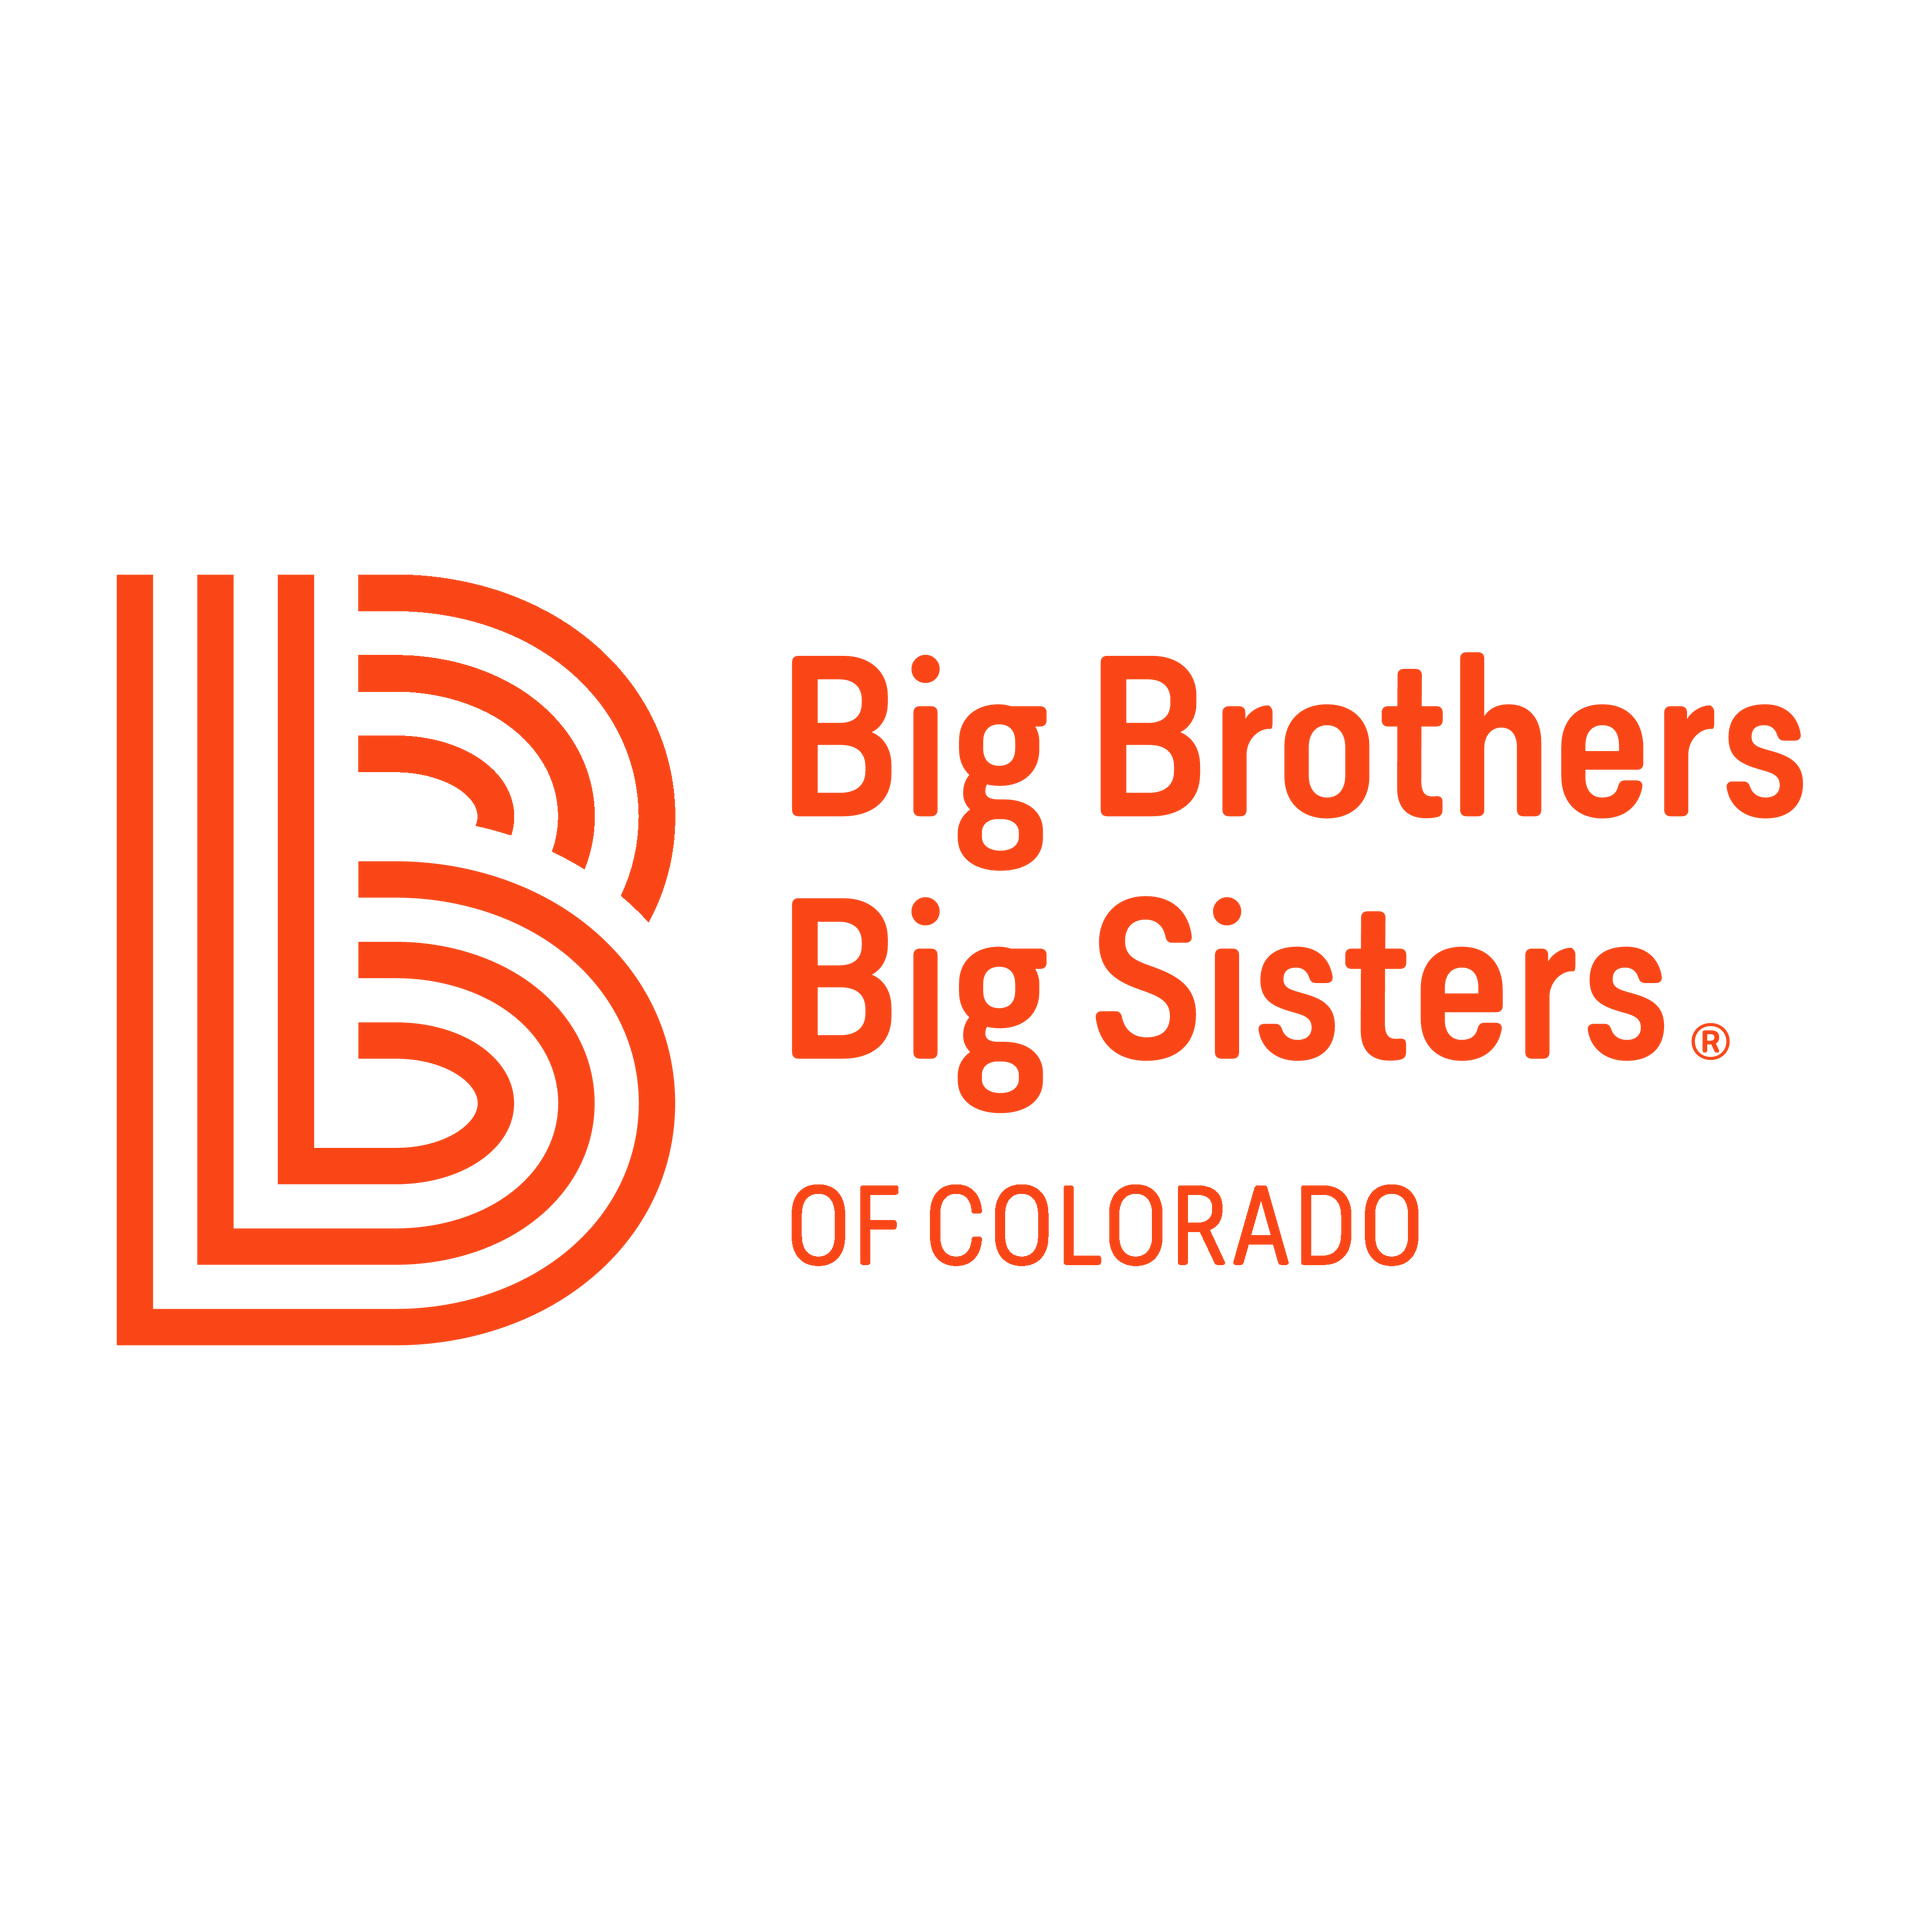 Big Brothers Big Sisters of Colorado